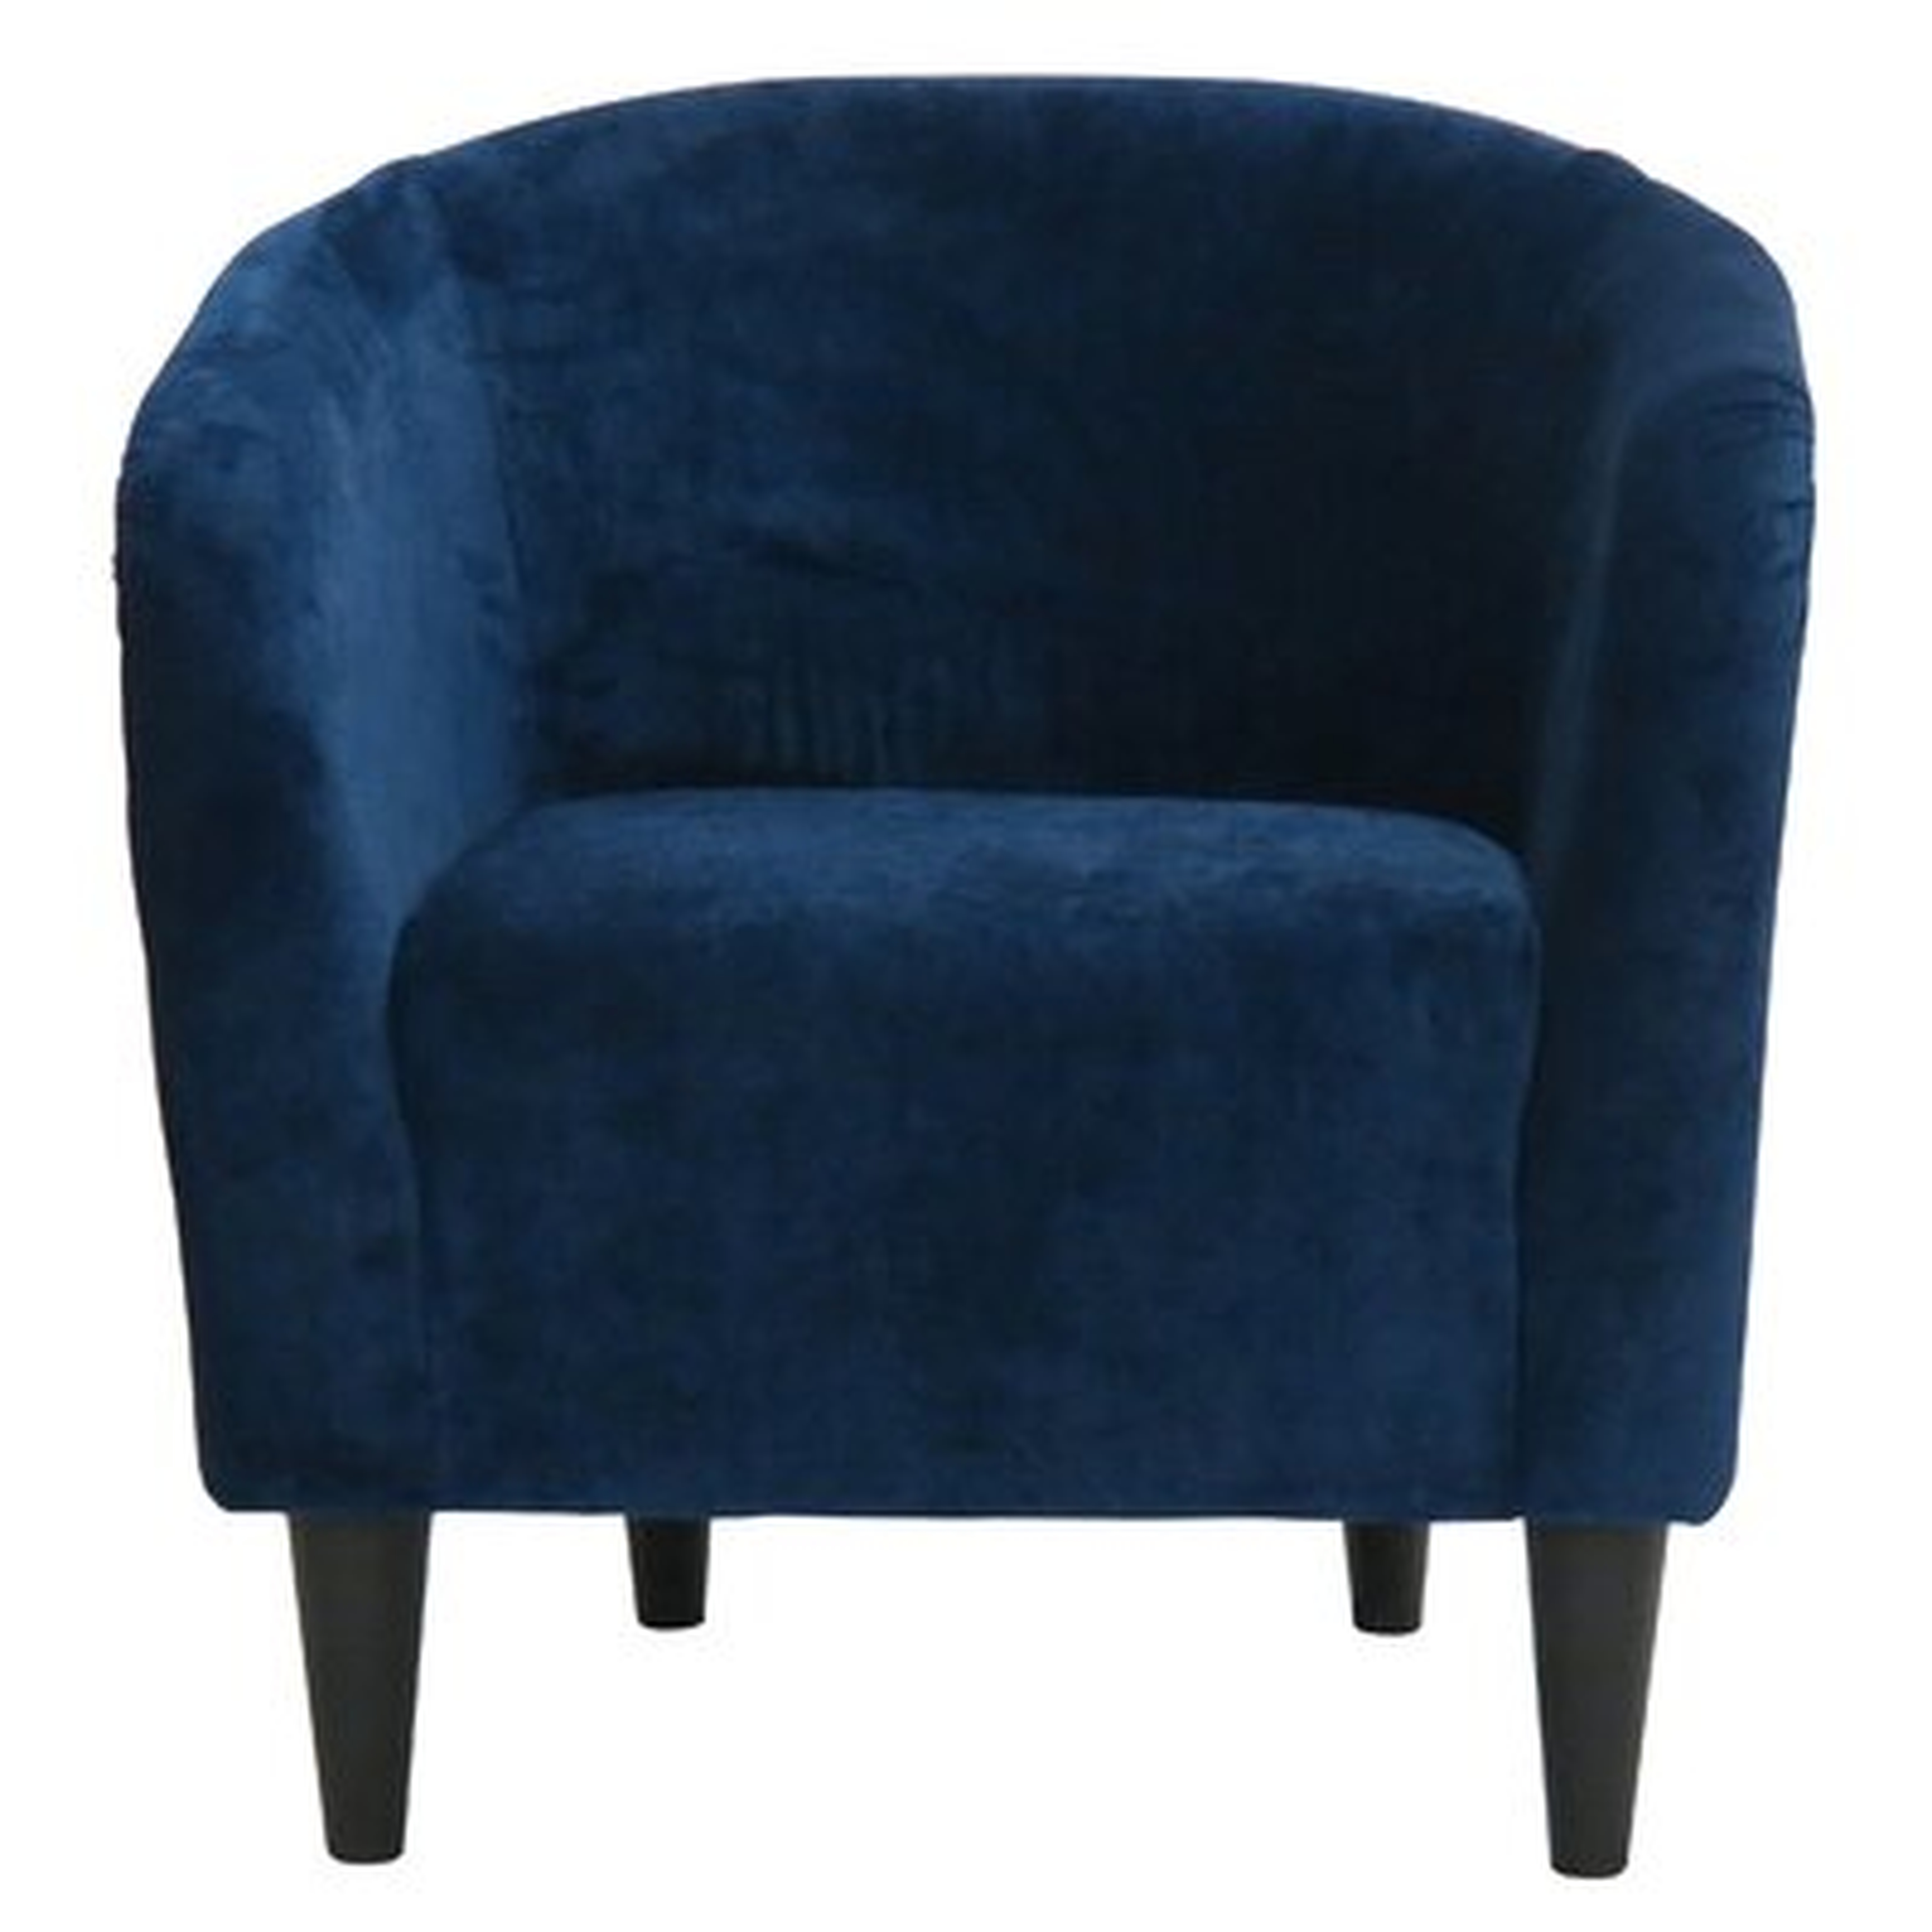 Upholstered Barrel Chair - Wayfair